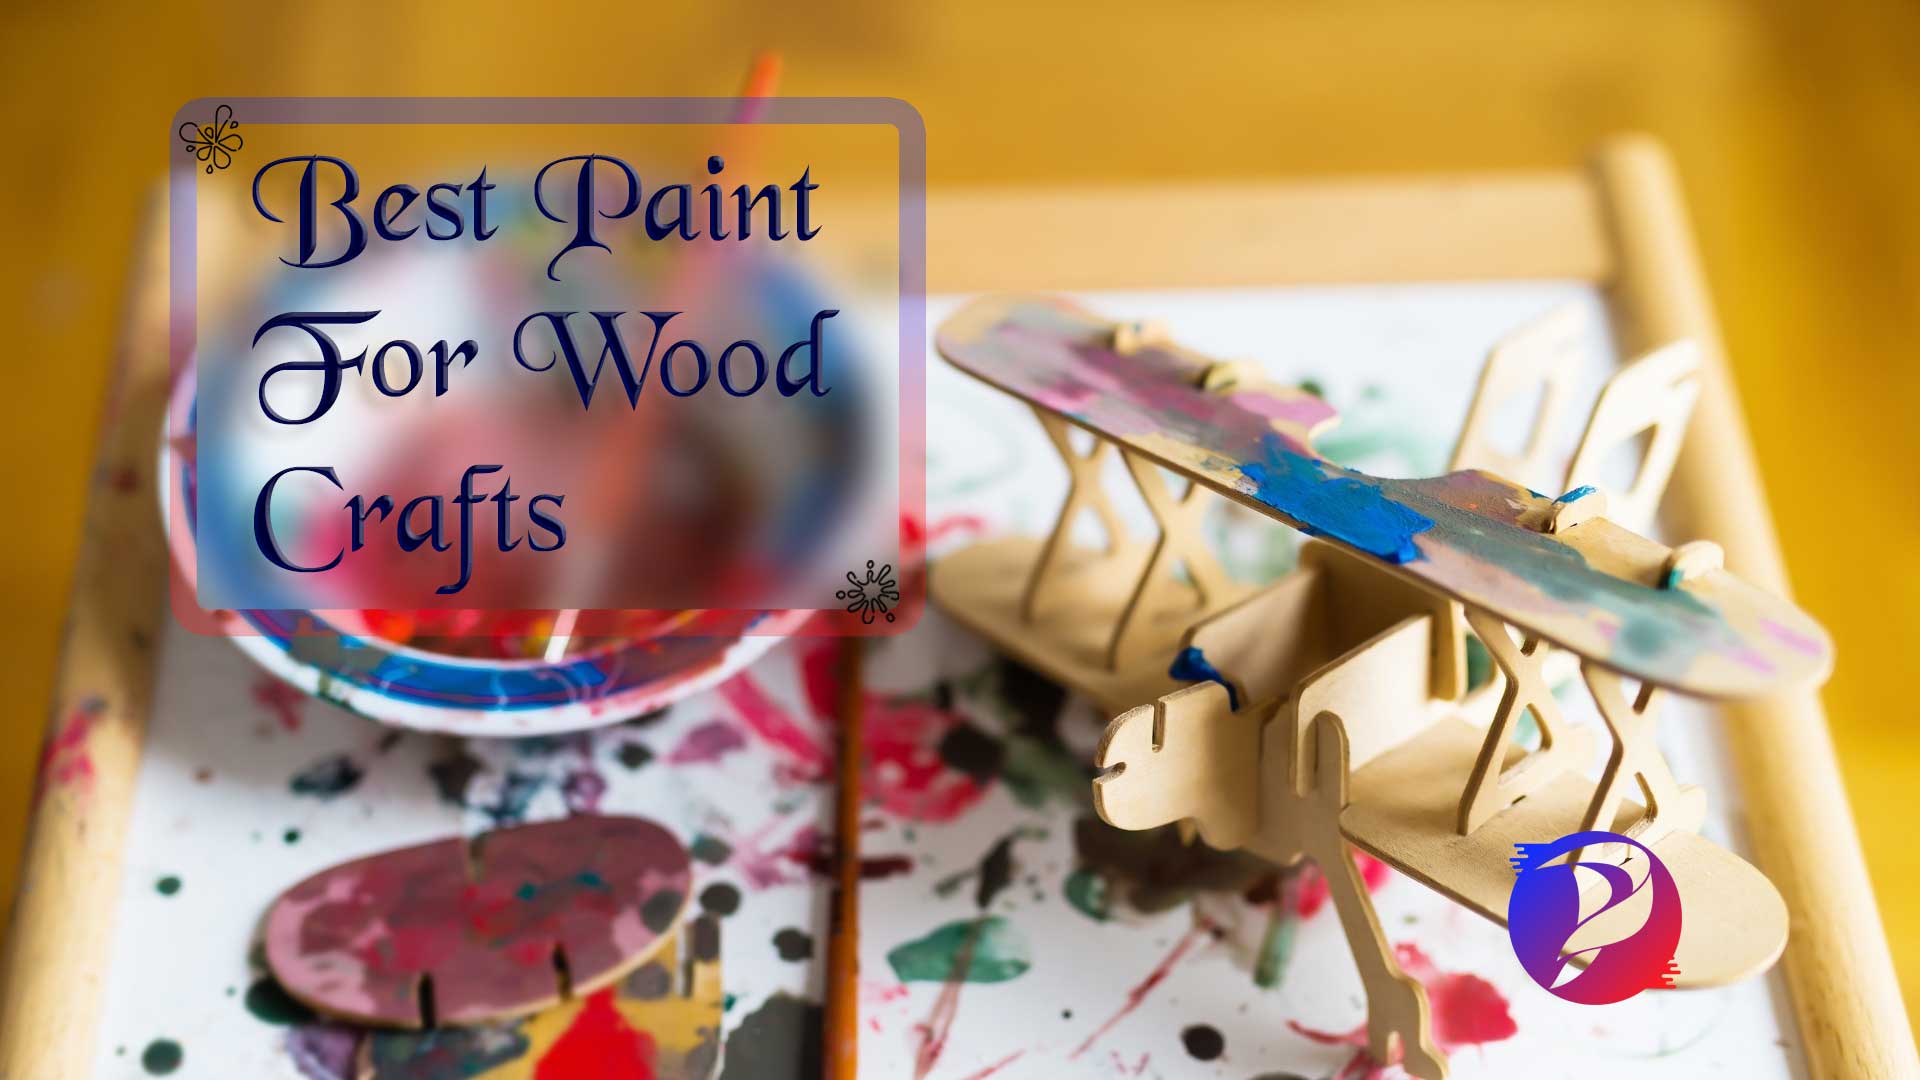 10 Best Paint for Wood Crafts- Reviews & Guide 2022 - Paint Catalogue